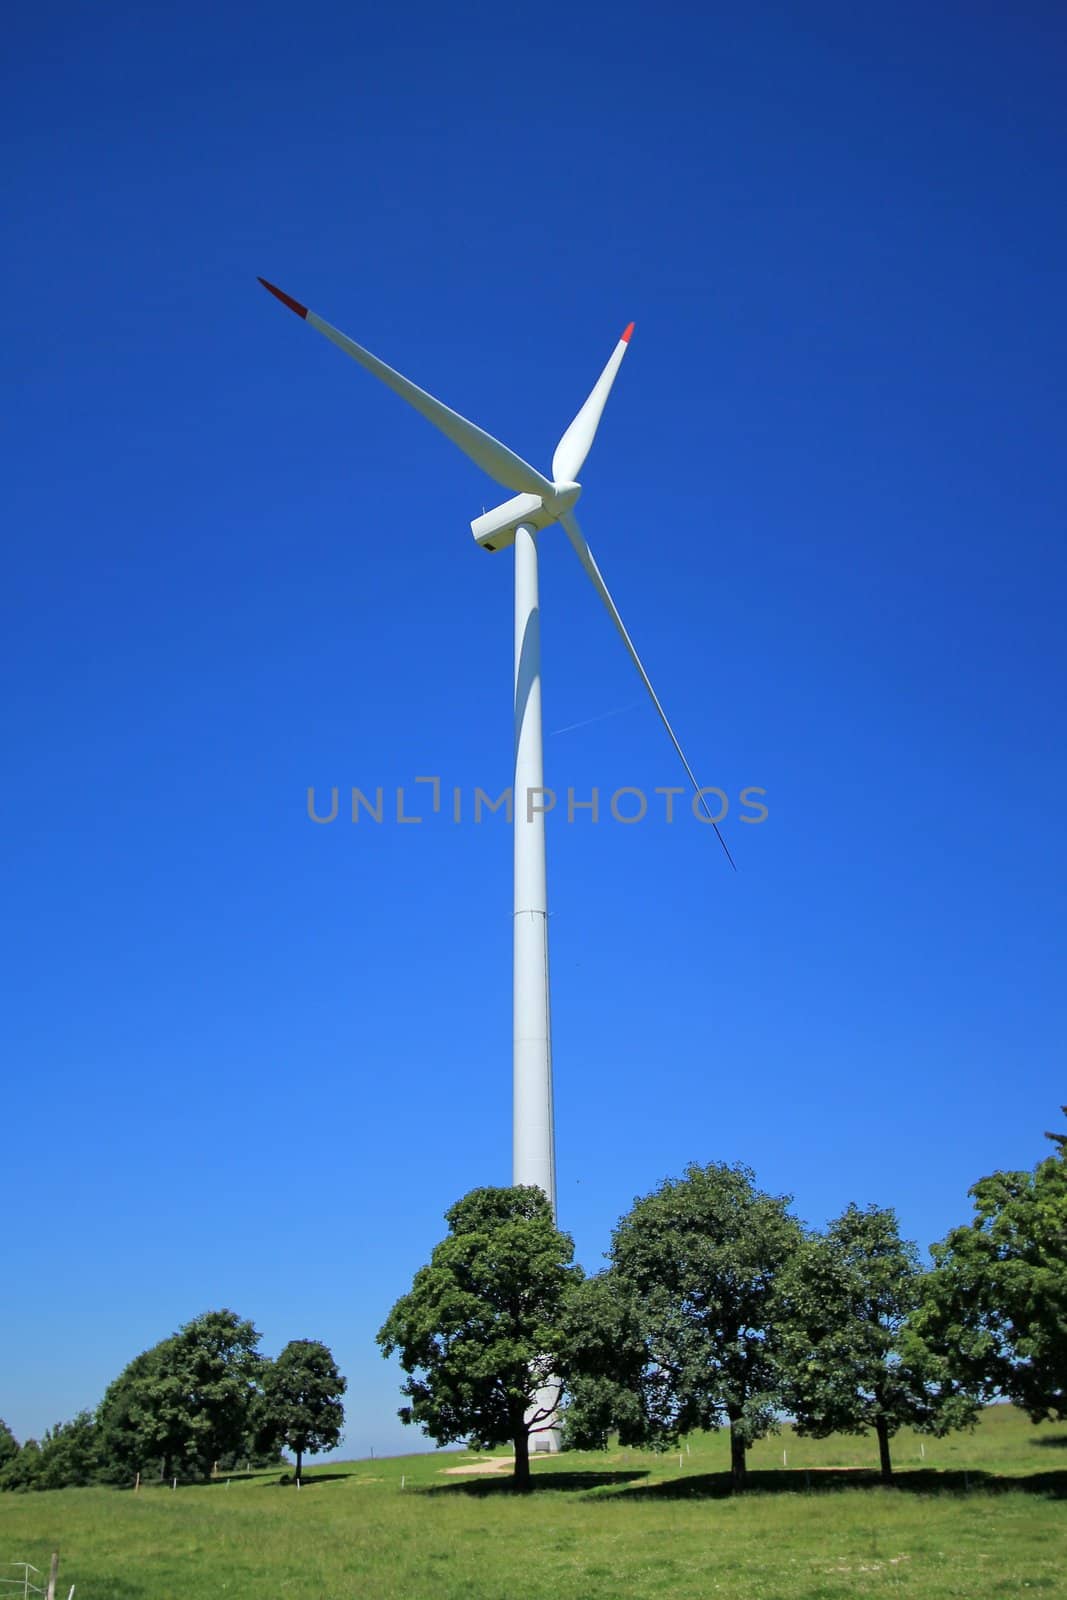 Wind turbine and trees by Elenaphotos21